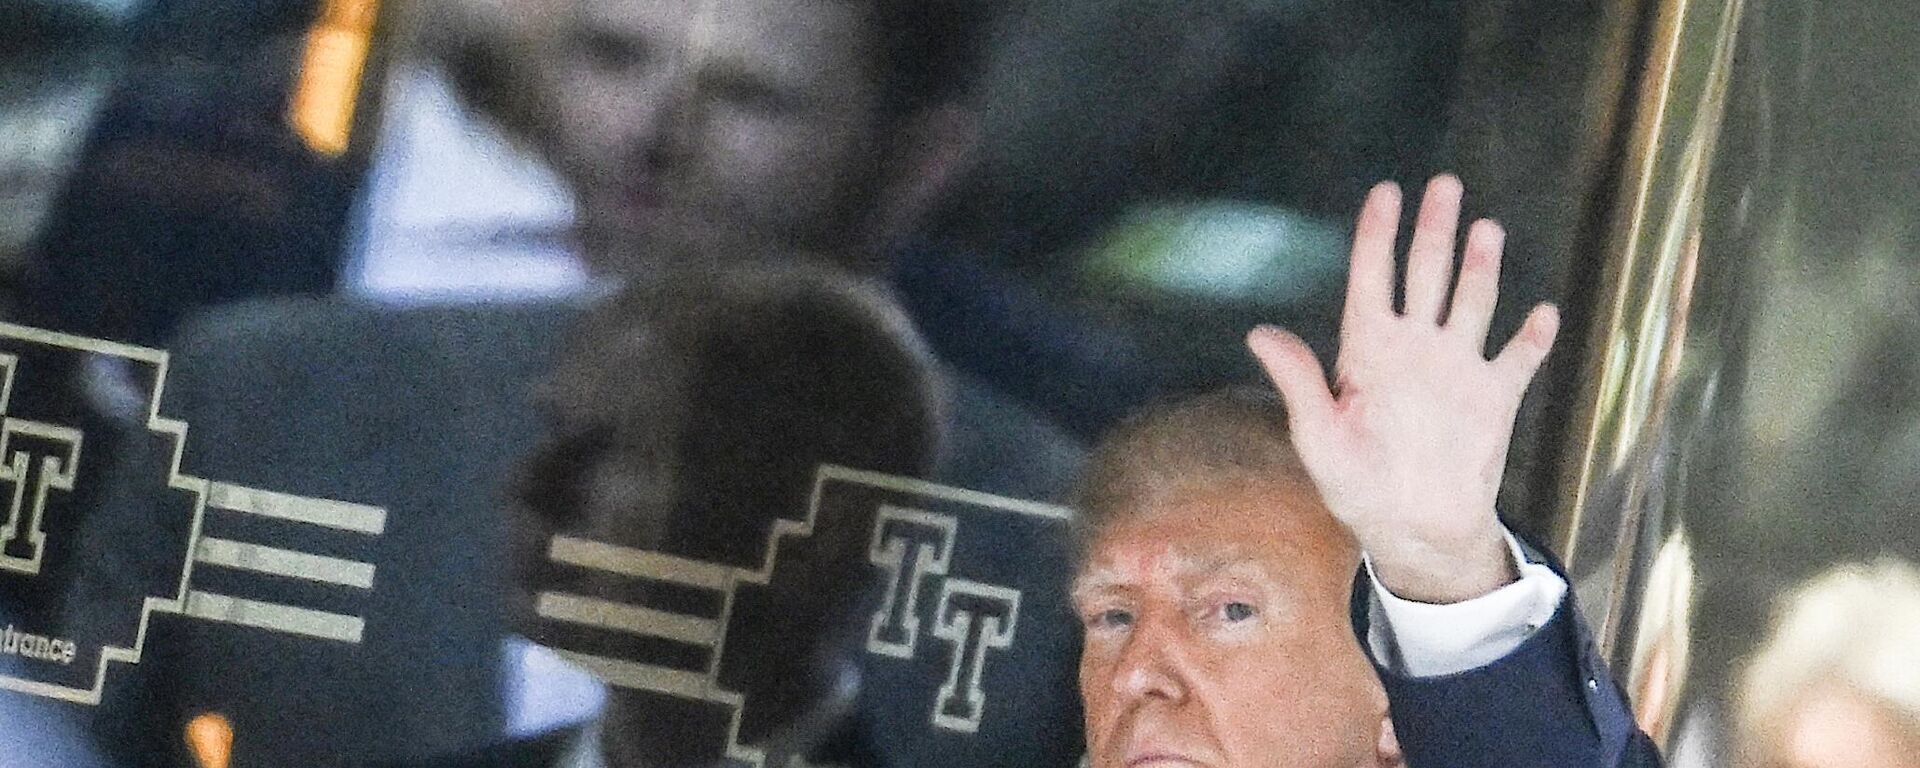 Former US president Donald Trump arrives at Trump Tower in New York on April 3, 2023. - Sputnik International, 1920, 04.04.2023